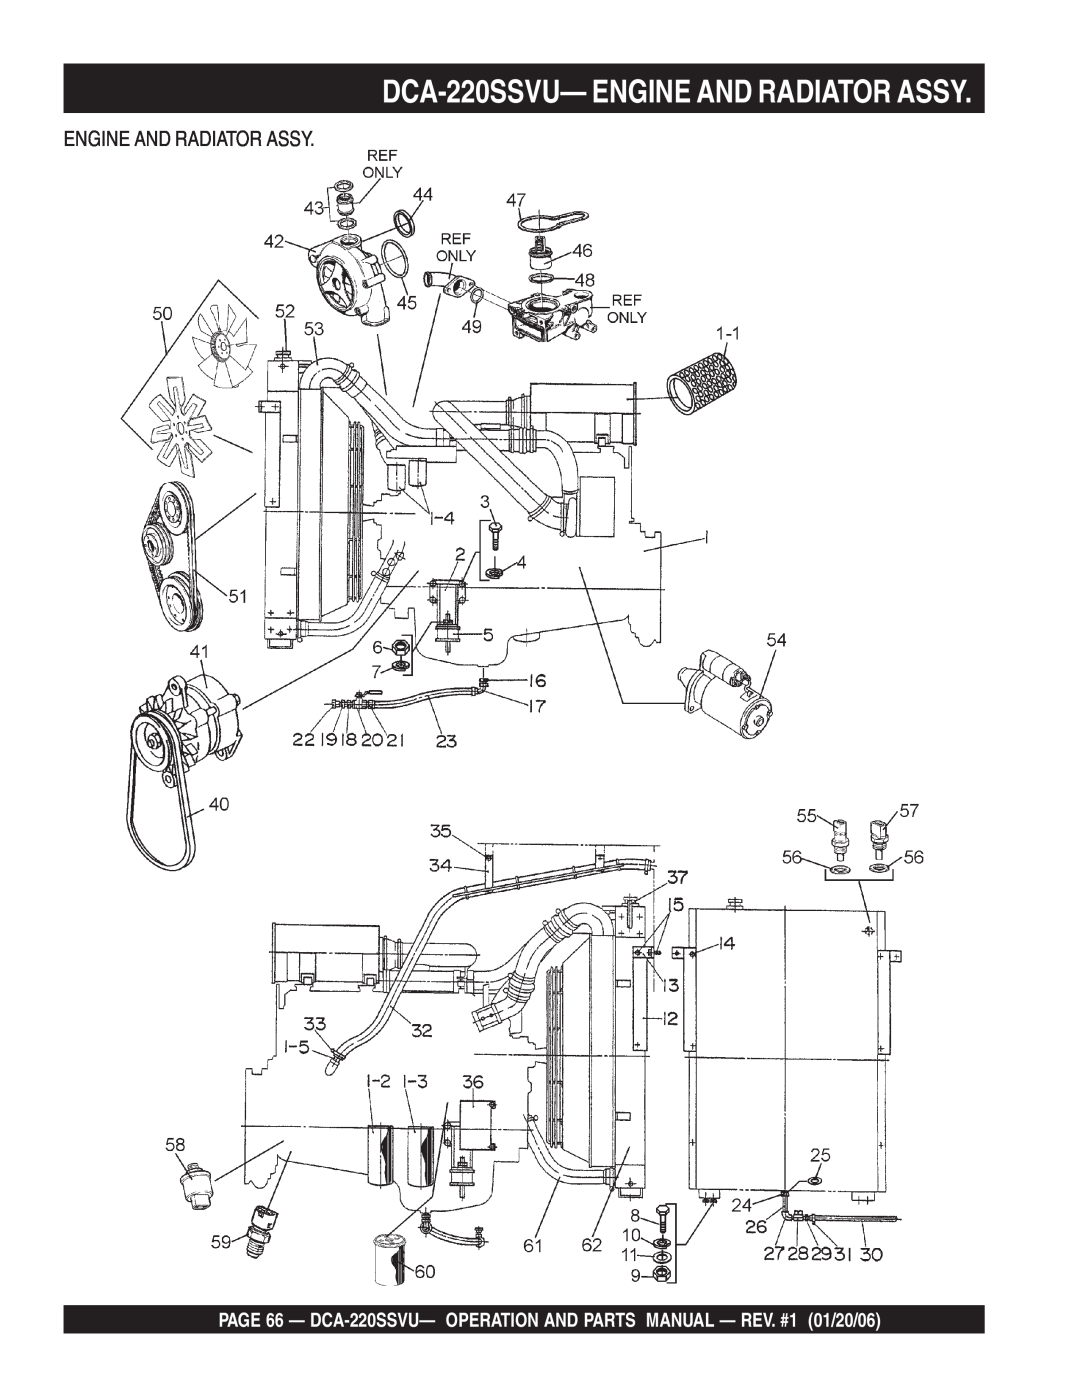 Multiquip operation manual DCA-220SSVU—ENGINE AND RADIATOR ASSY 